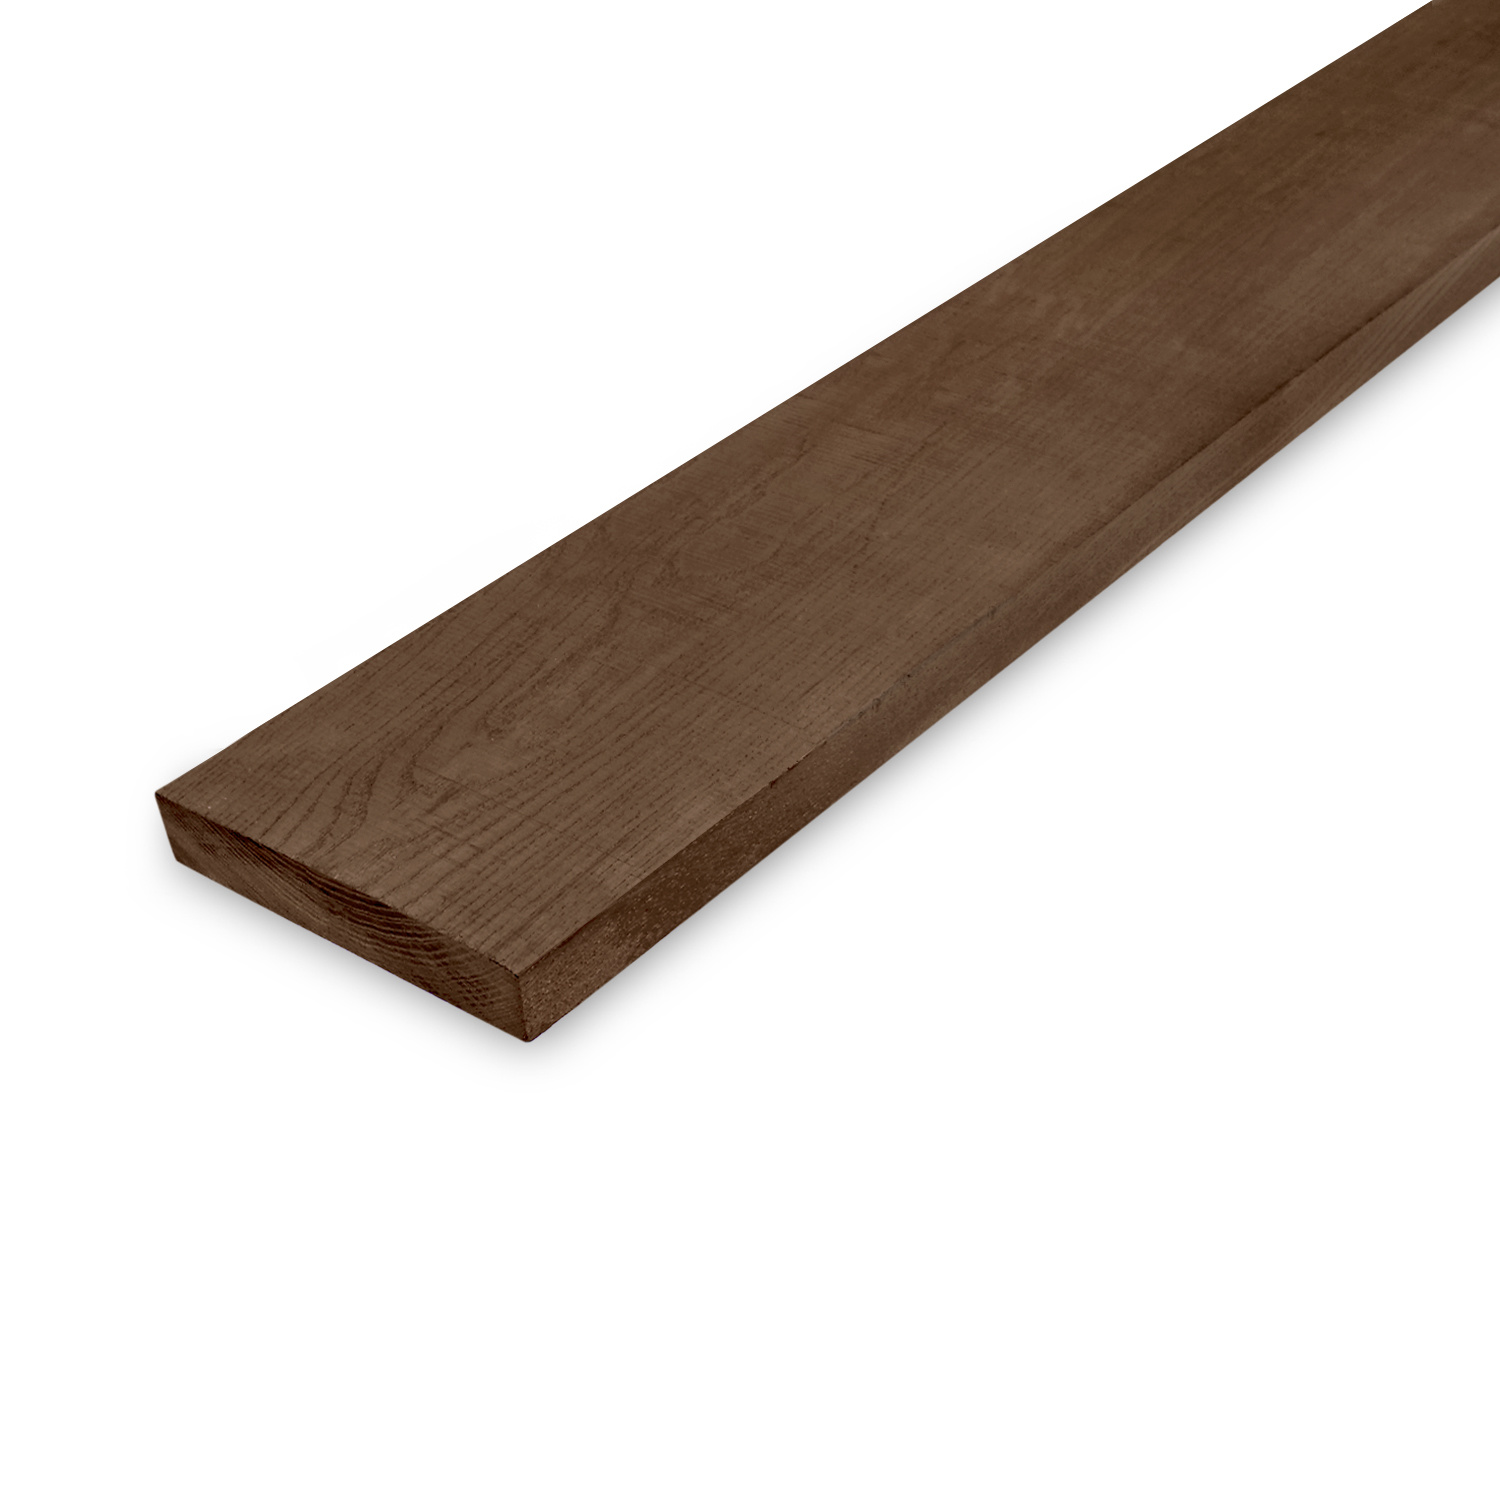 Voorspeller Grootte verdrietig Thermowood essen plank 26x105 mm - ruw thermowood essen kd (8-12%) |  HOUTvakman